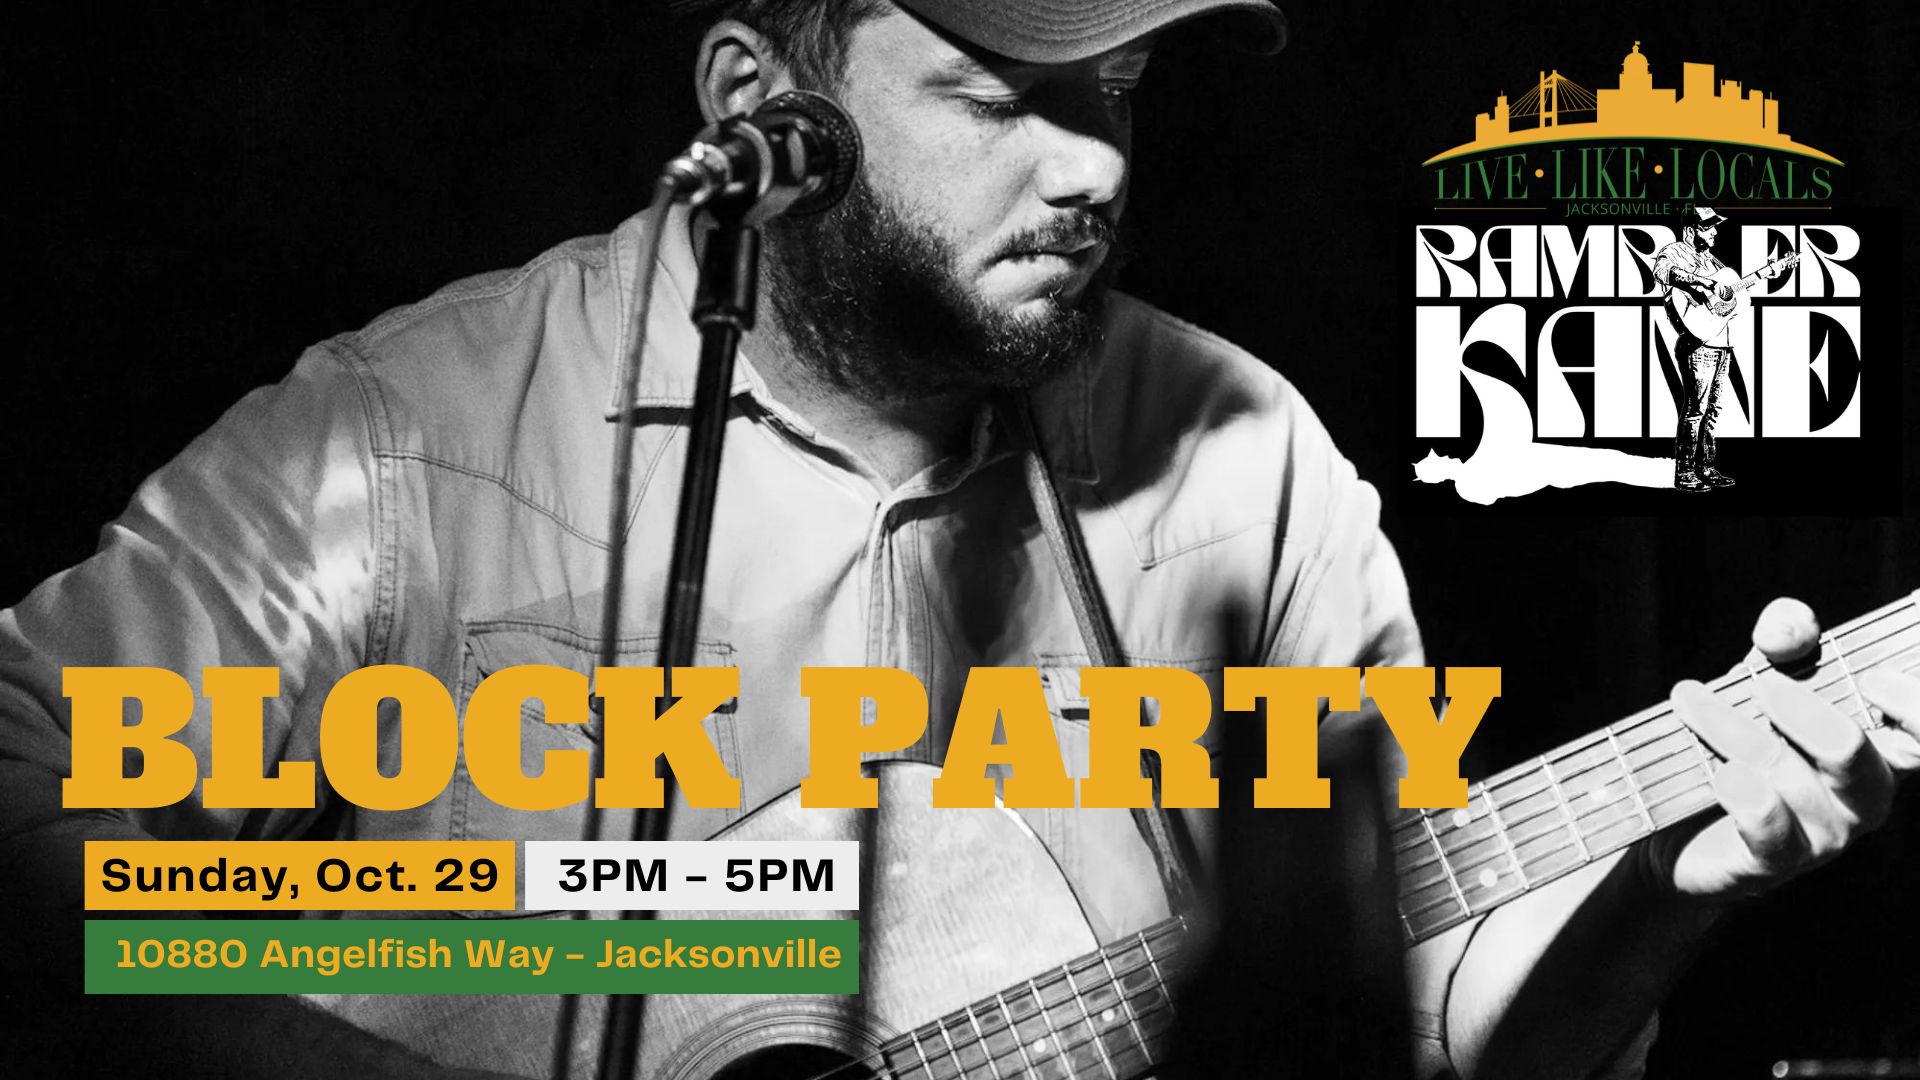 Live Like Locals Jacksonville block party - rambler kane